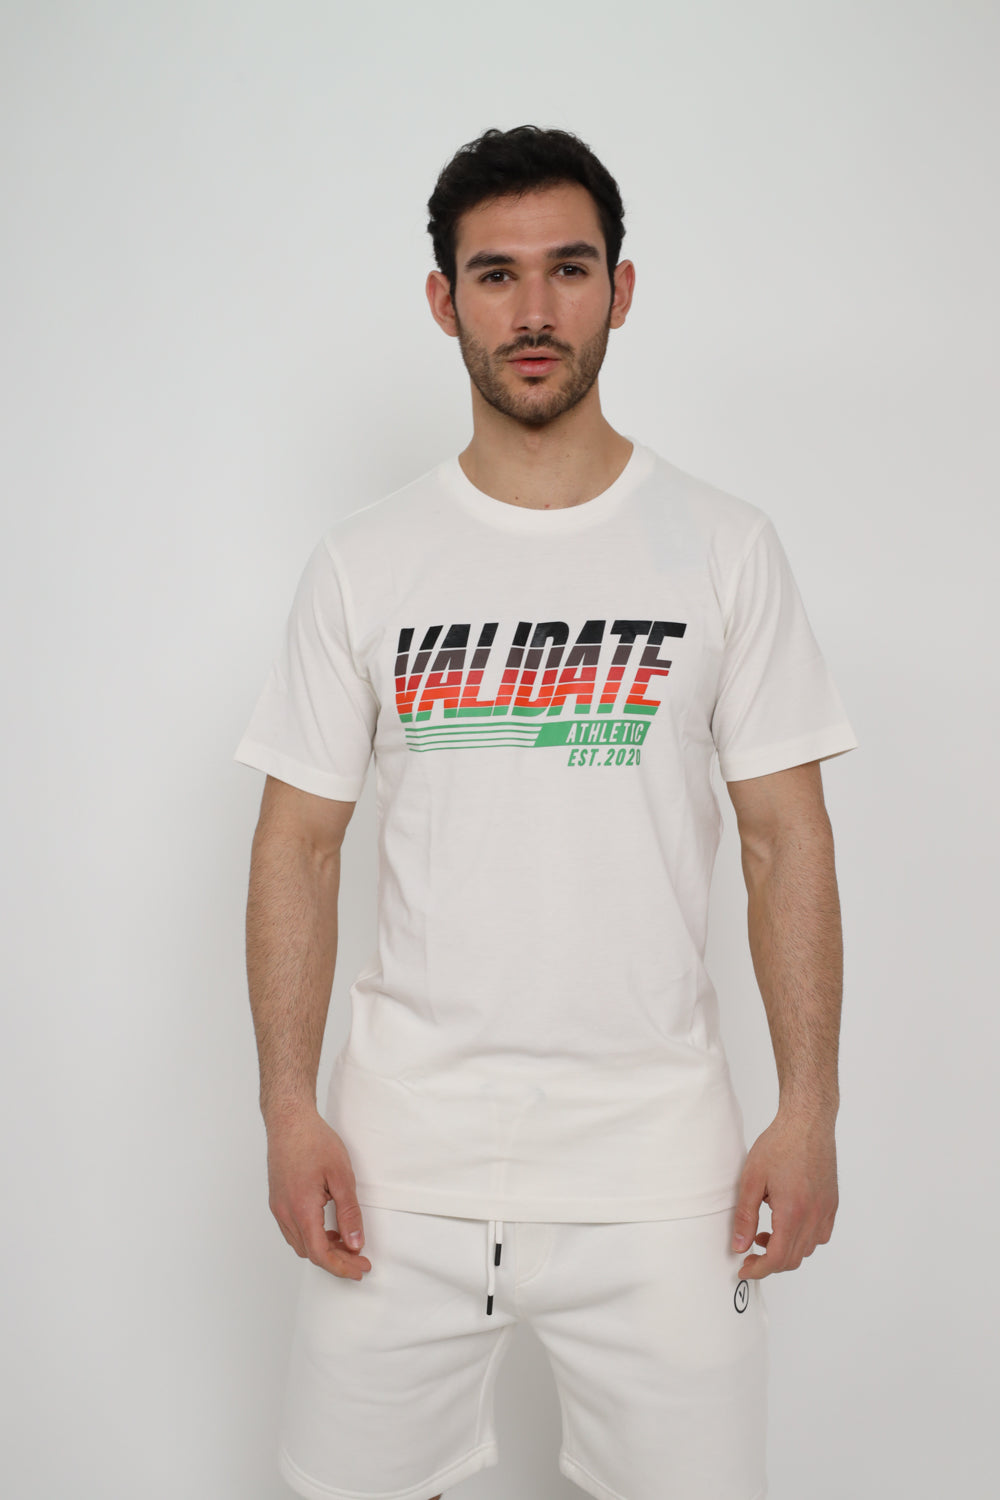 Validate Zach T-Shirt White